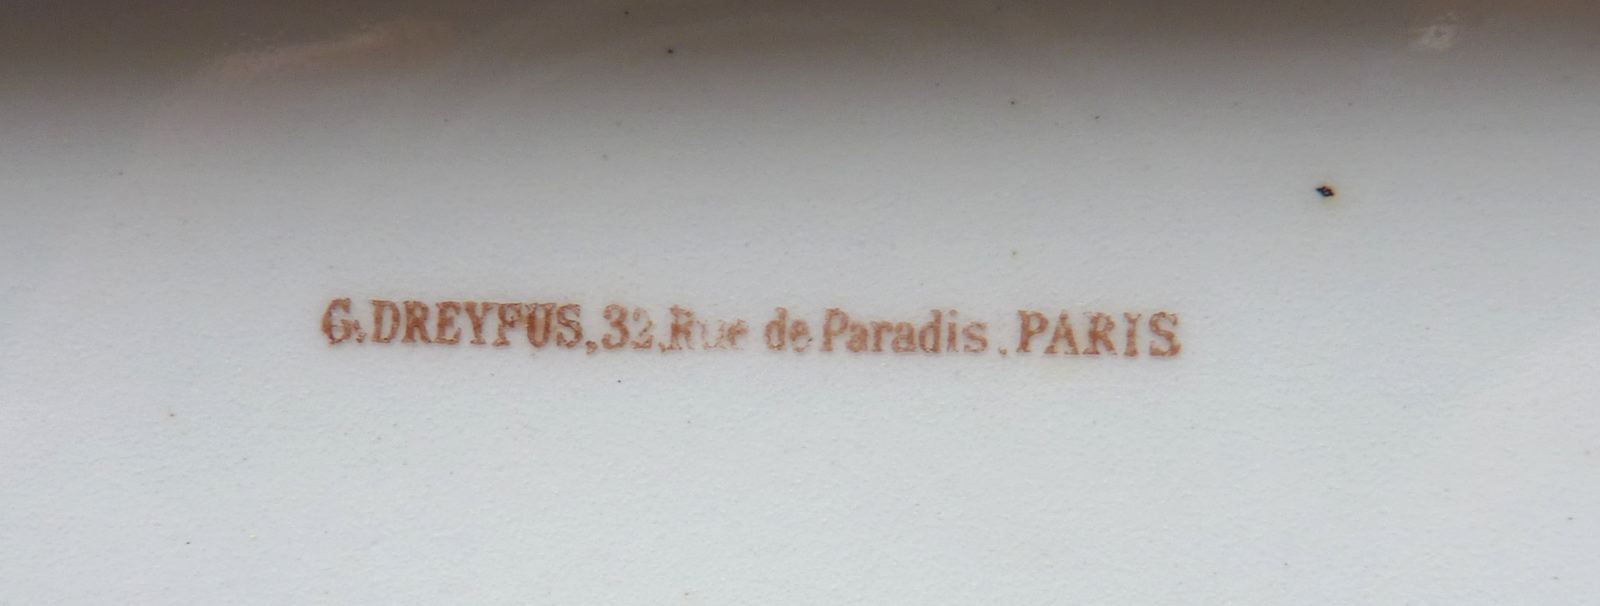 Administrateurs - Manufacture Parisienne des Biscuits Olibets